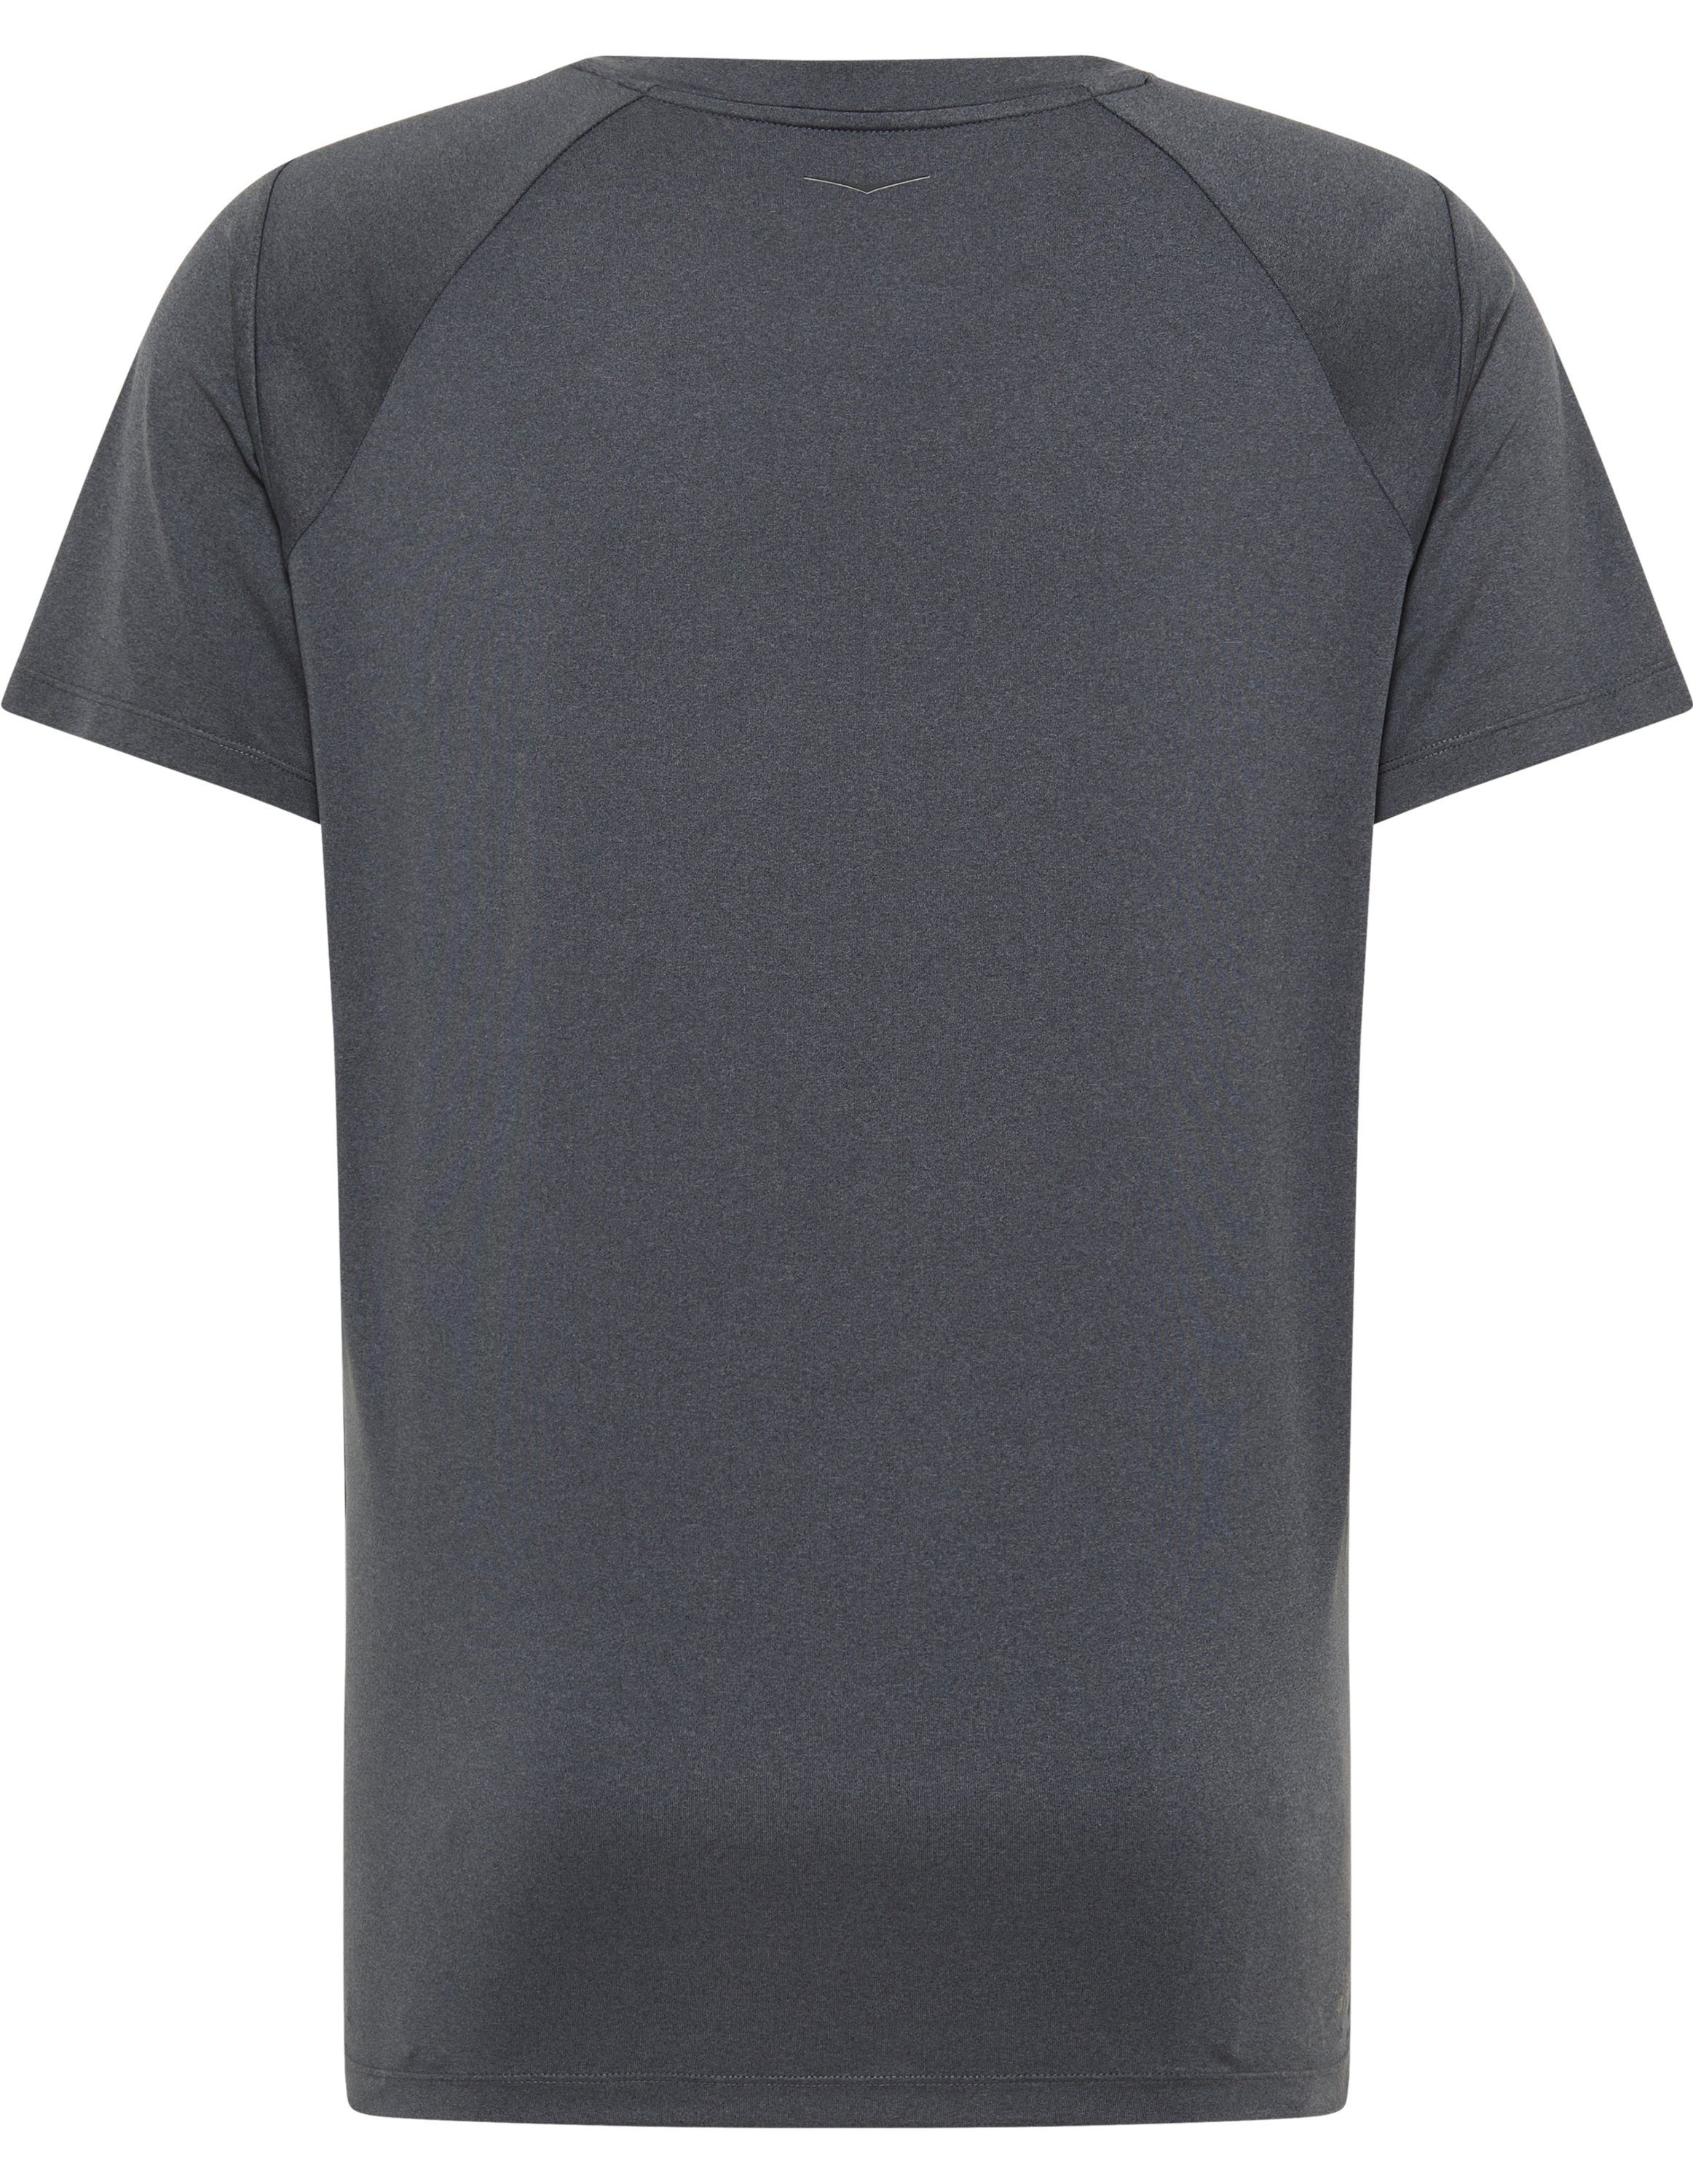 Venice T-Shirt CLAY VB Beach Men melange carbon T-Shirt grey